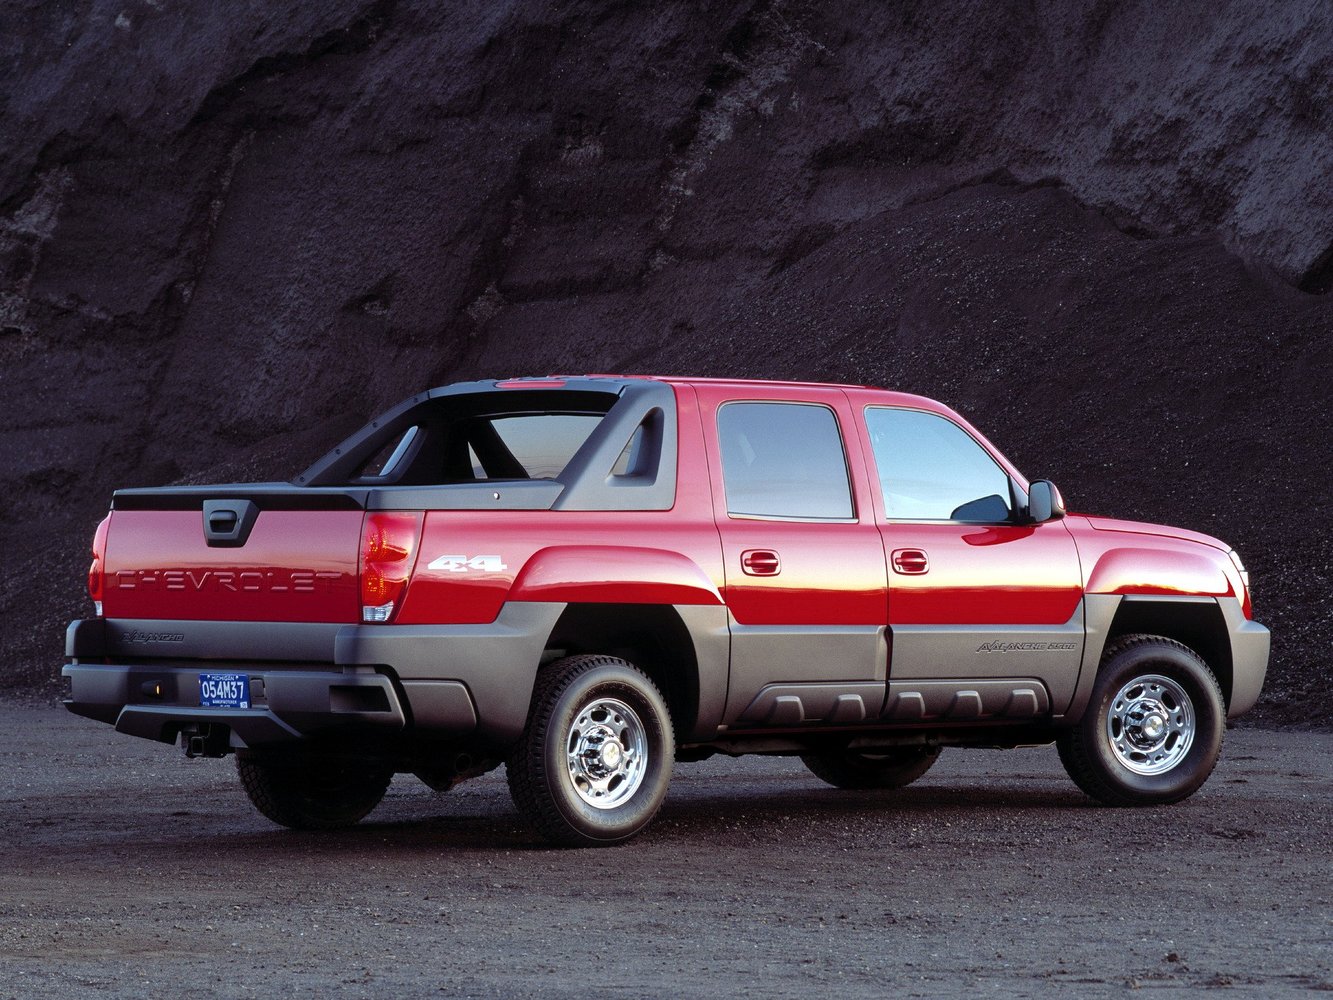 пикап Chevrolet Avalanche 2001 - 2006г выпуска модификация 5.3 AT (295 л.с.)